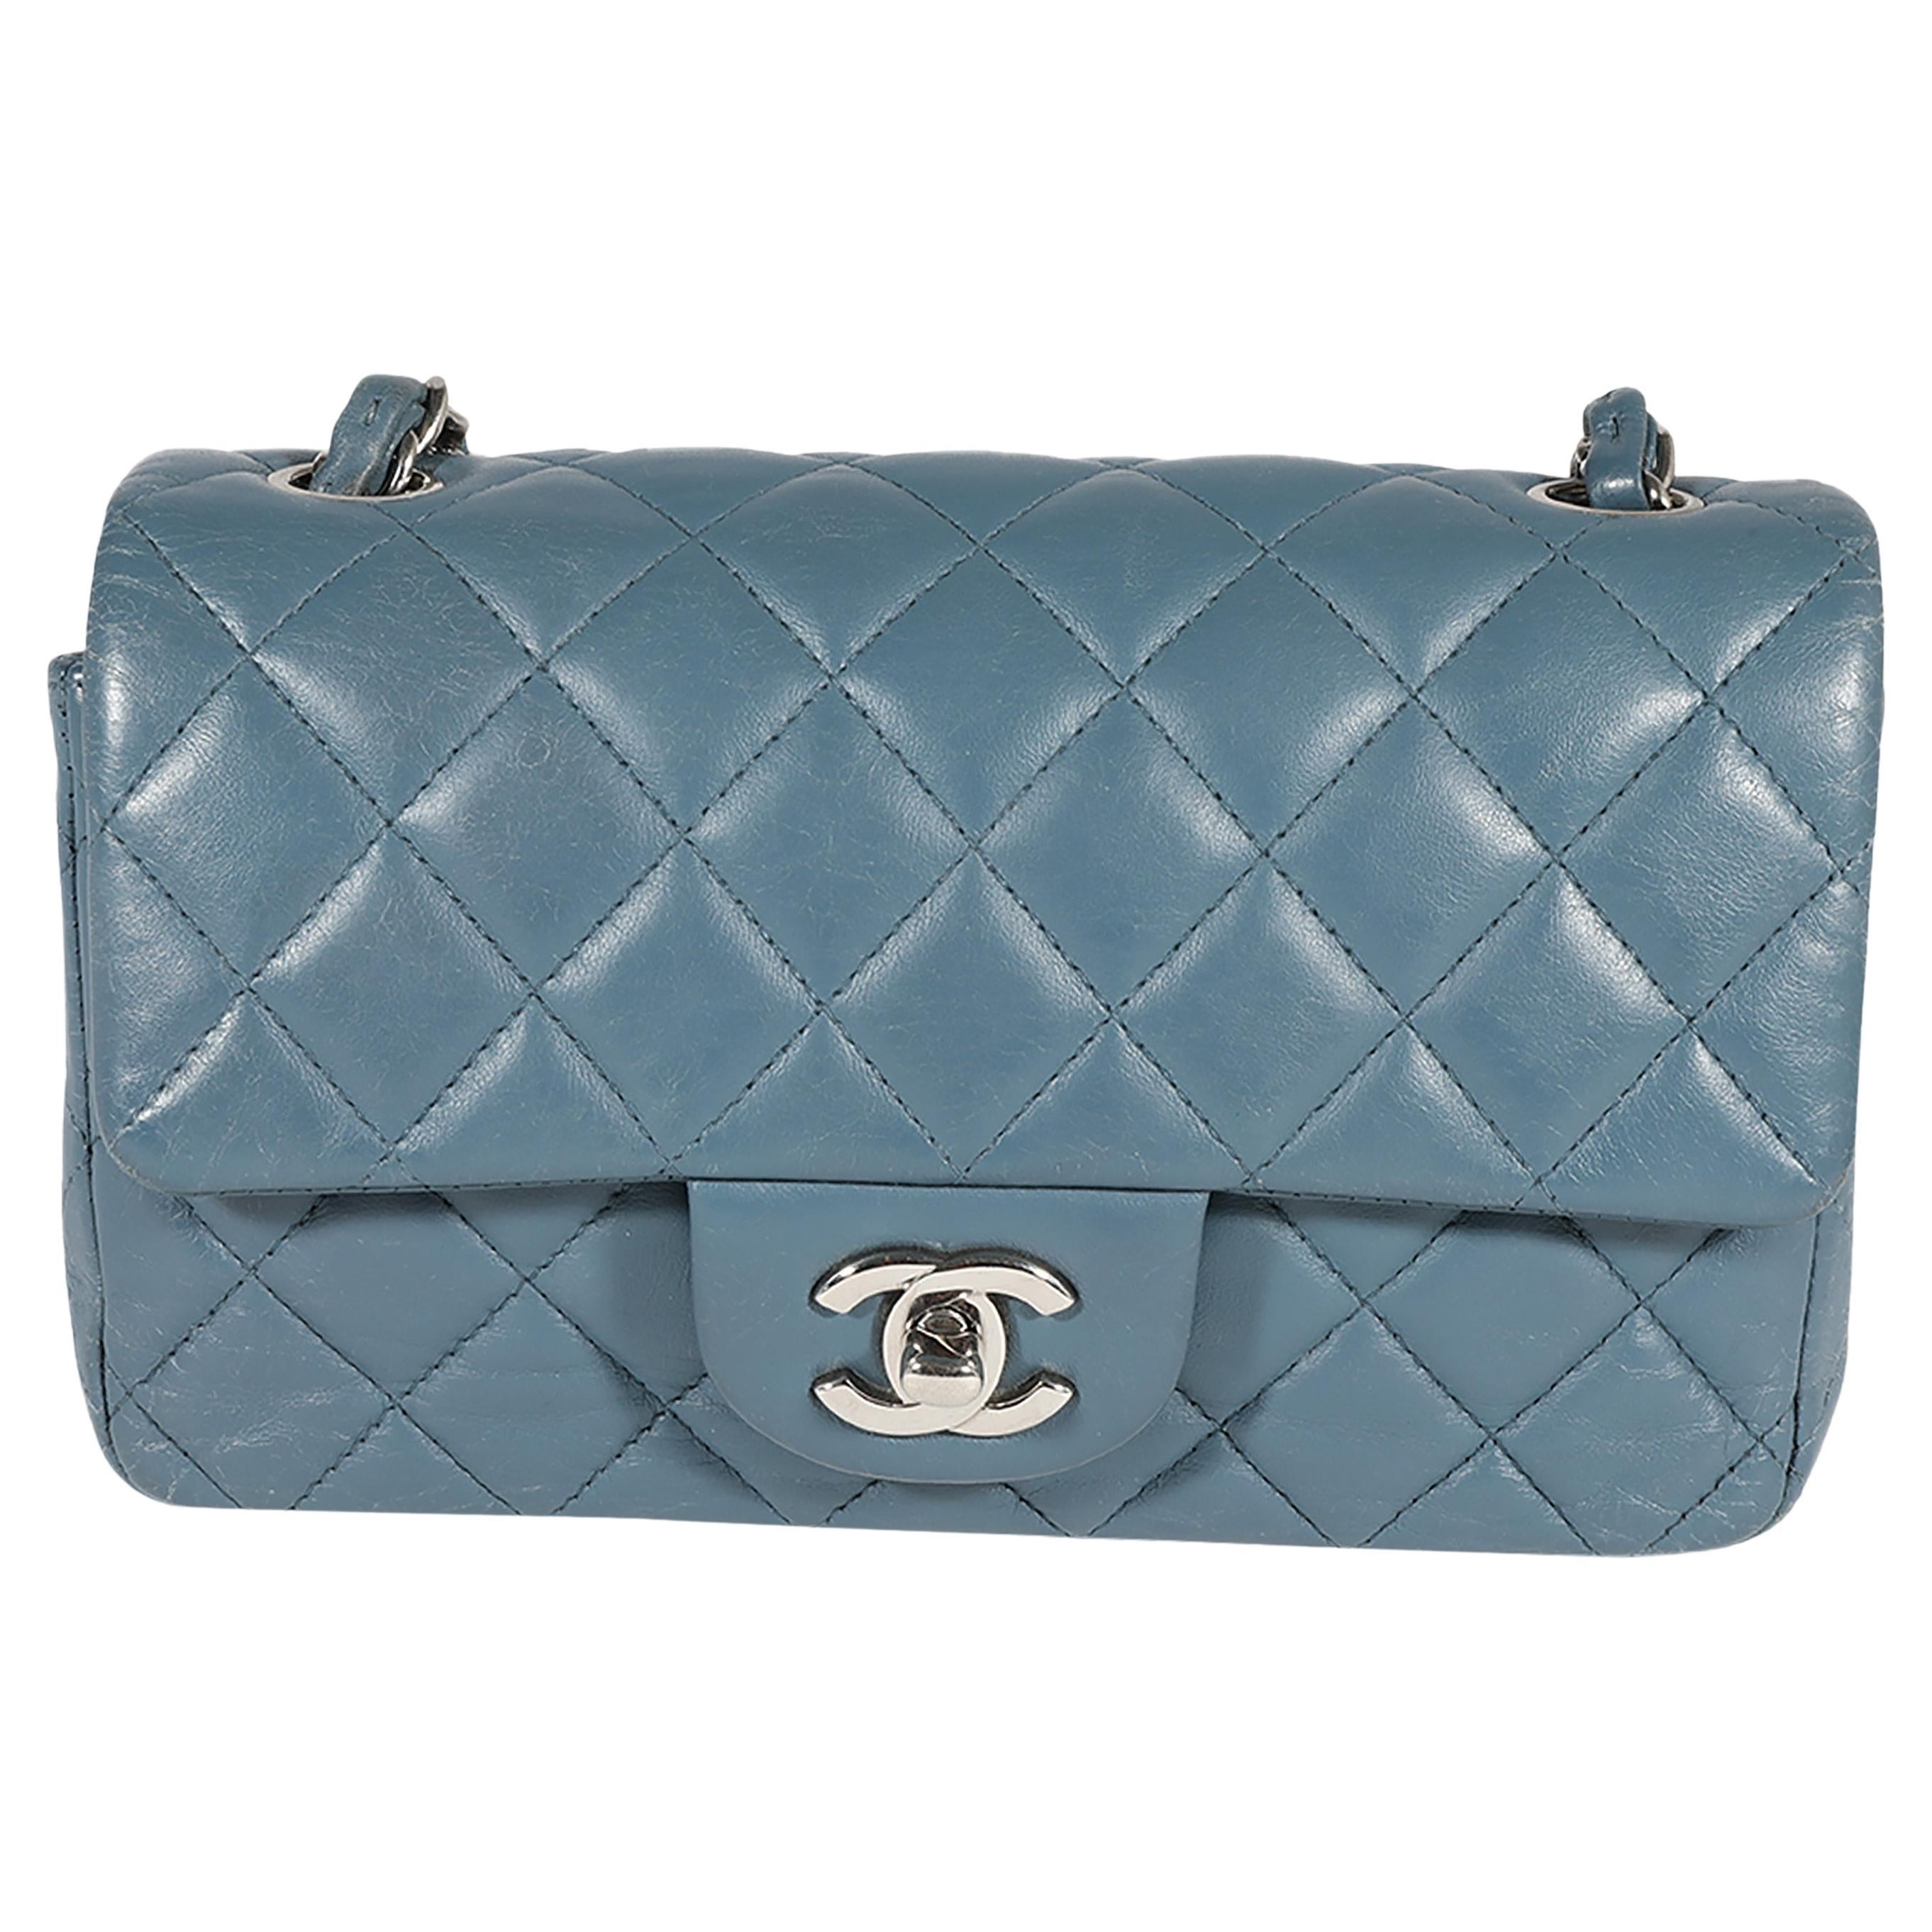 Chanel Blue Quilted Lambskin Mini Rectangular Classic Flap Bag